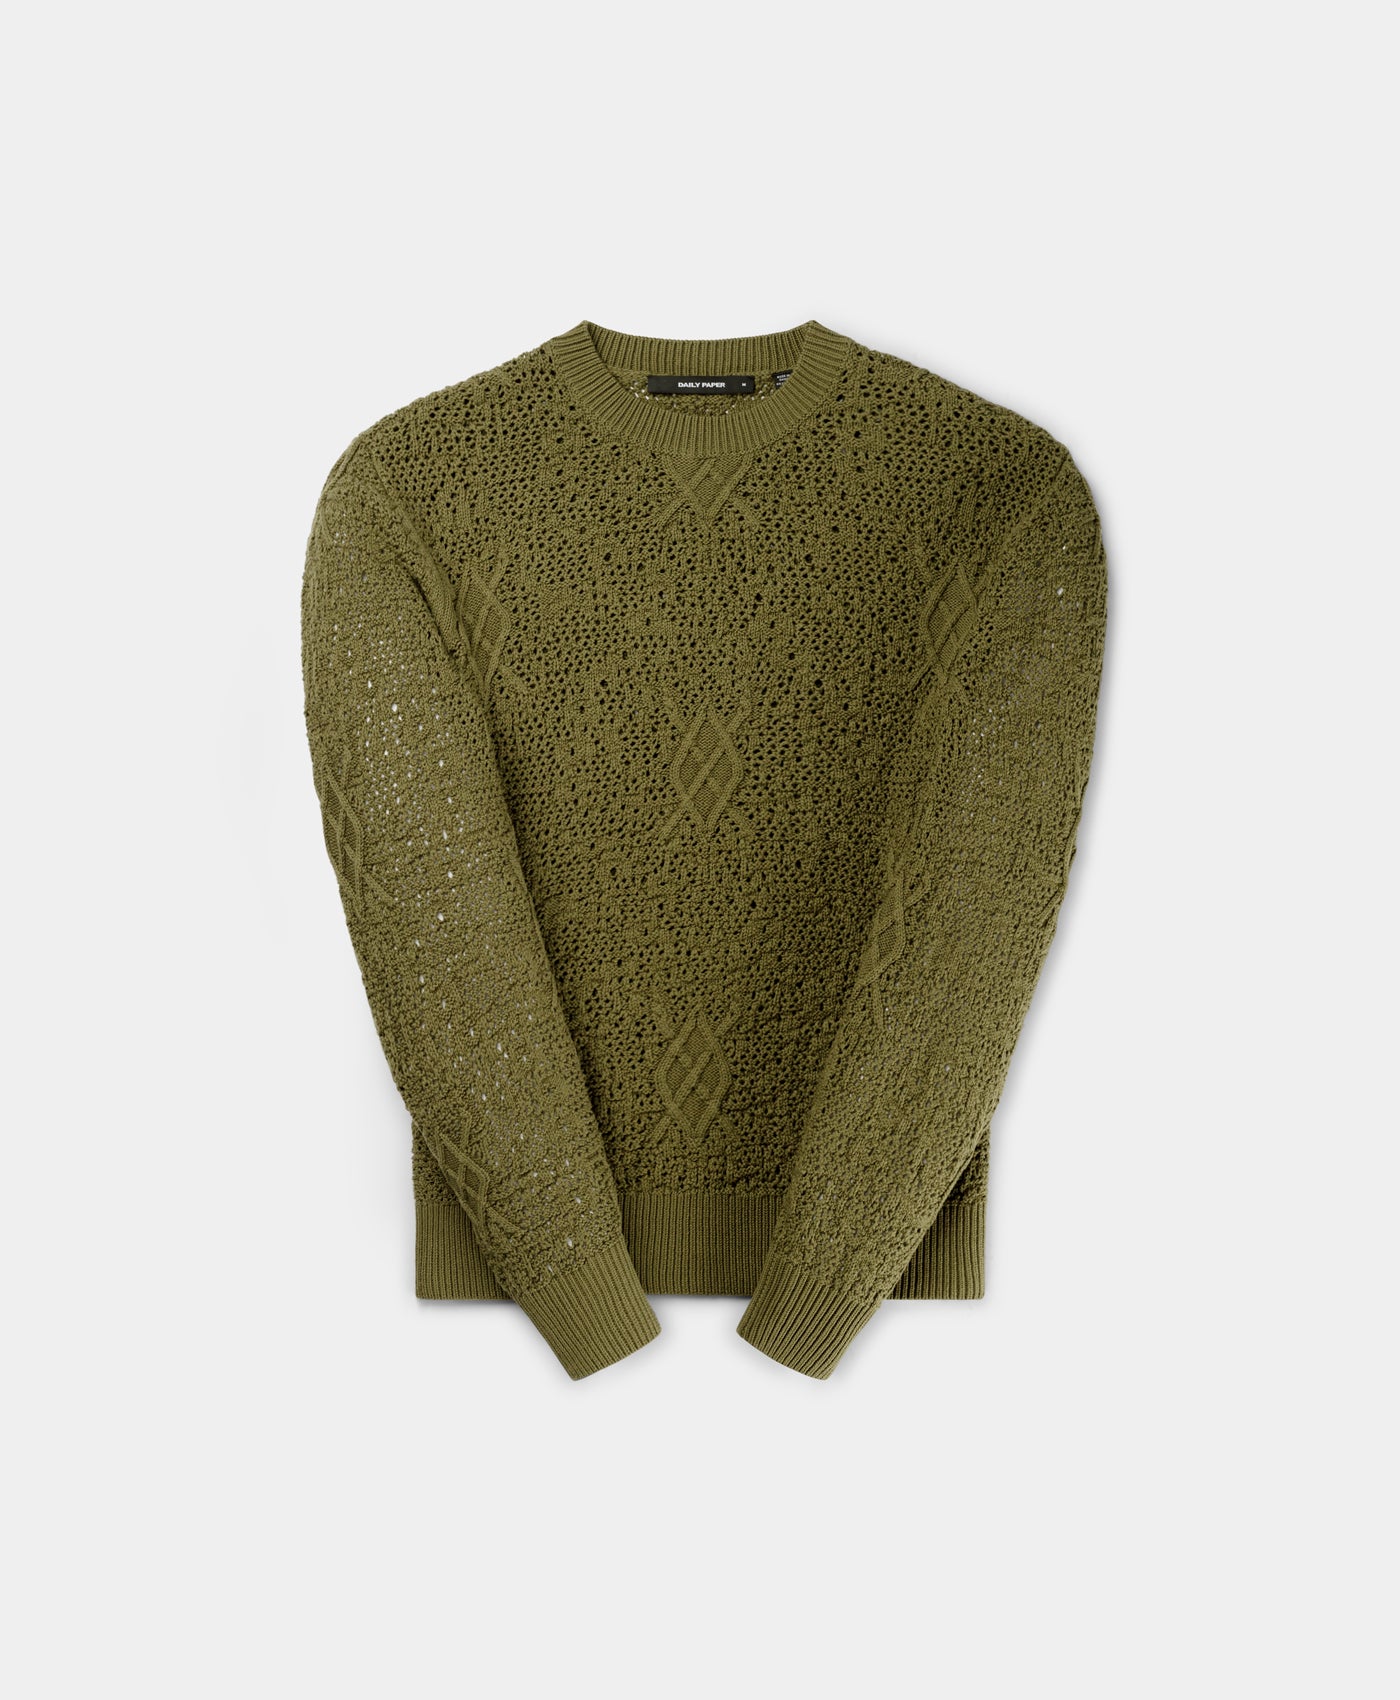 DP - Four Leaf Green Shield Crochet Sweater - Packshot - Front